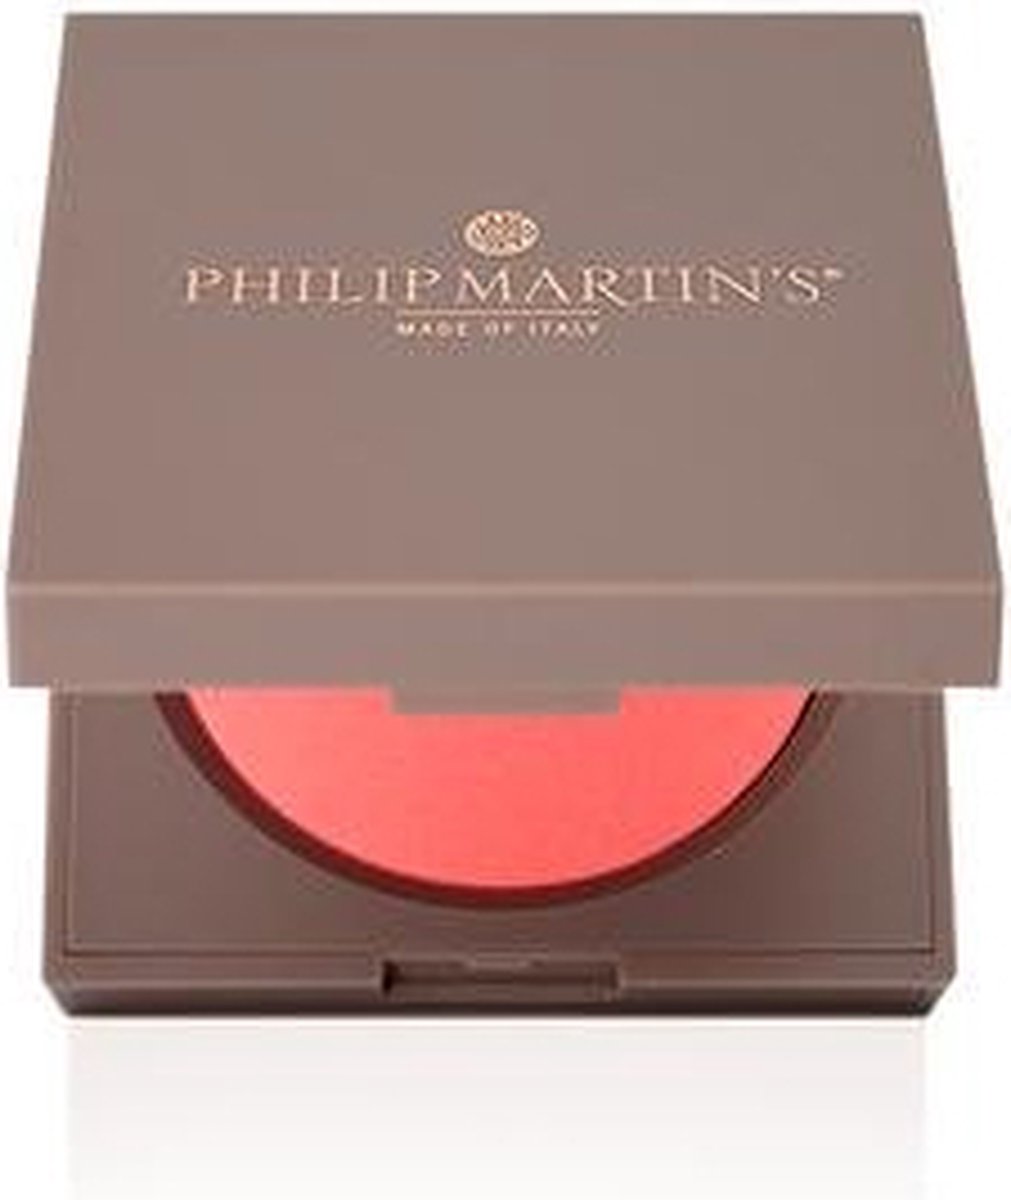 Philip Martin's - Make-up - blush 701 Rose